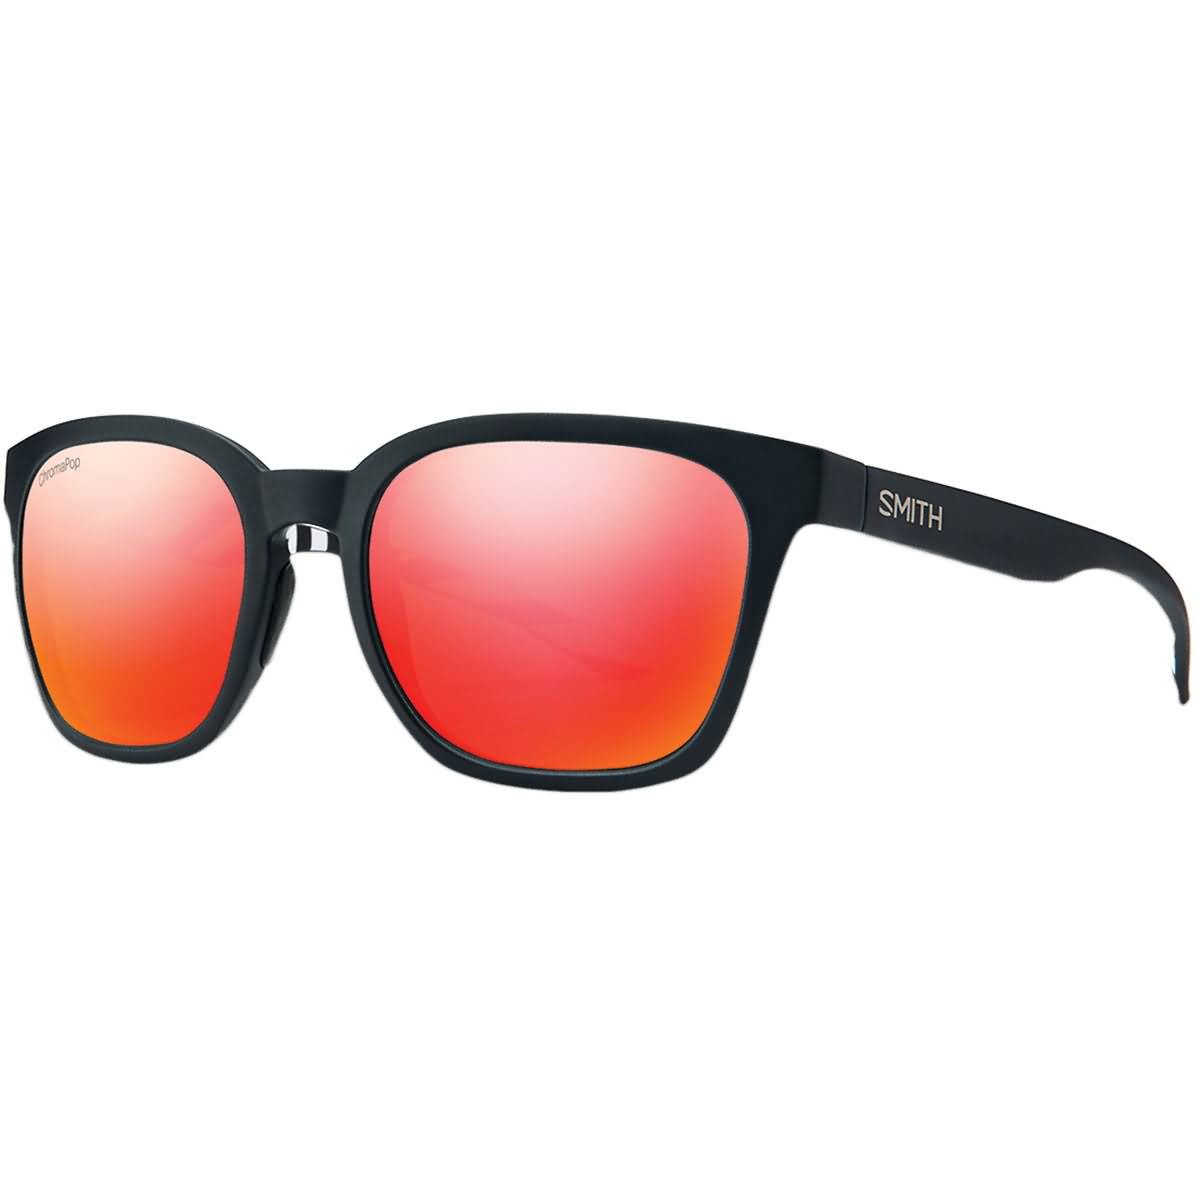 Smith Optics Founder Chromapop Adult Lifestyle Sunglasses-FOCMDMSQ